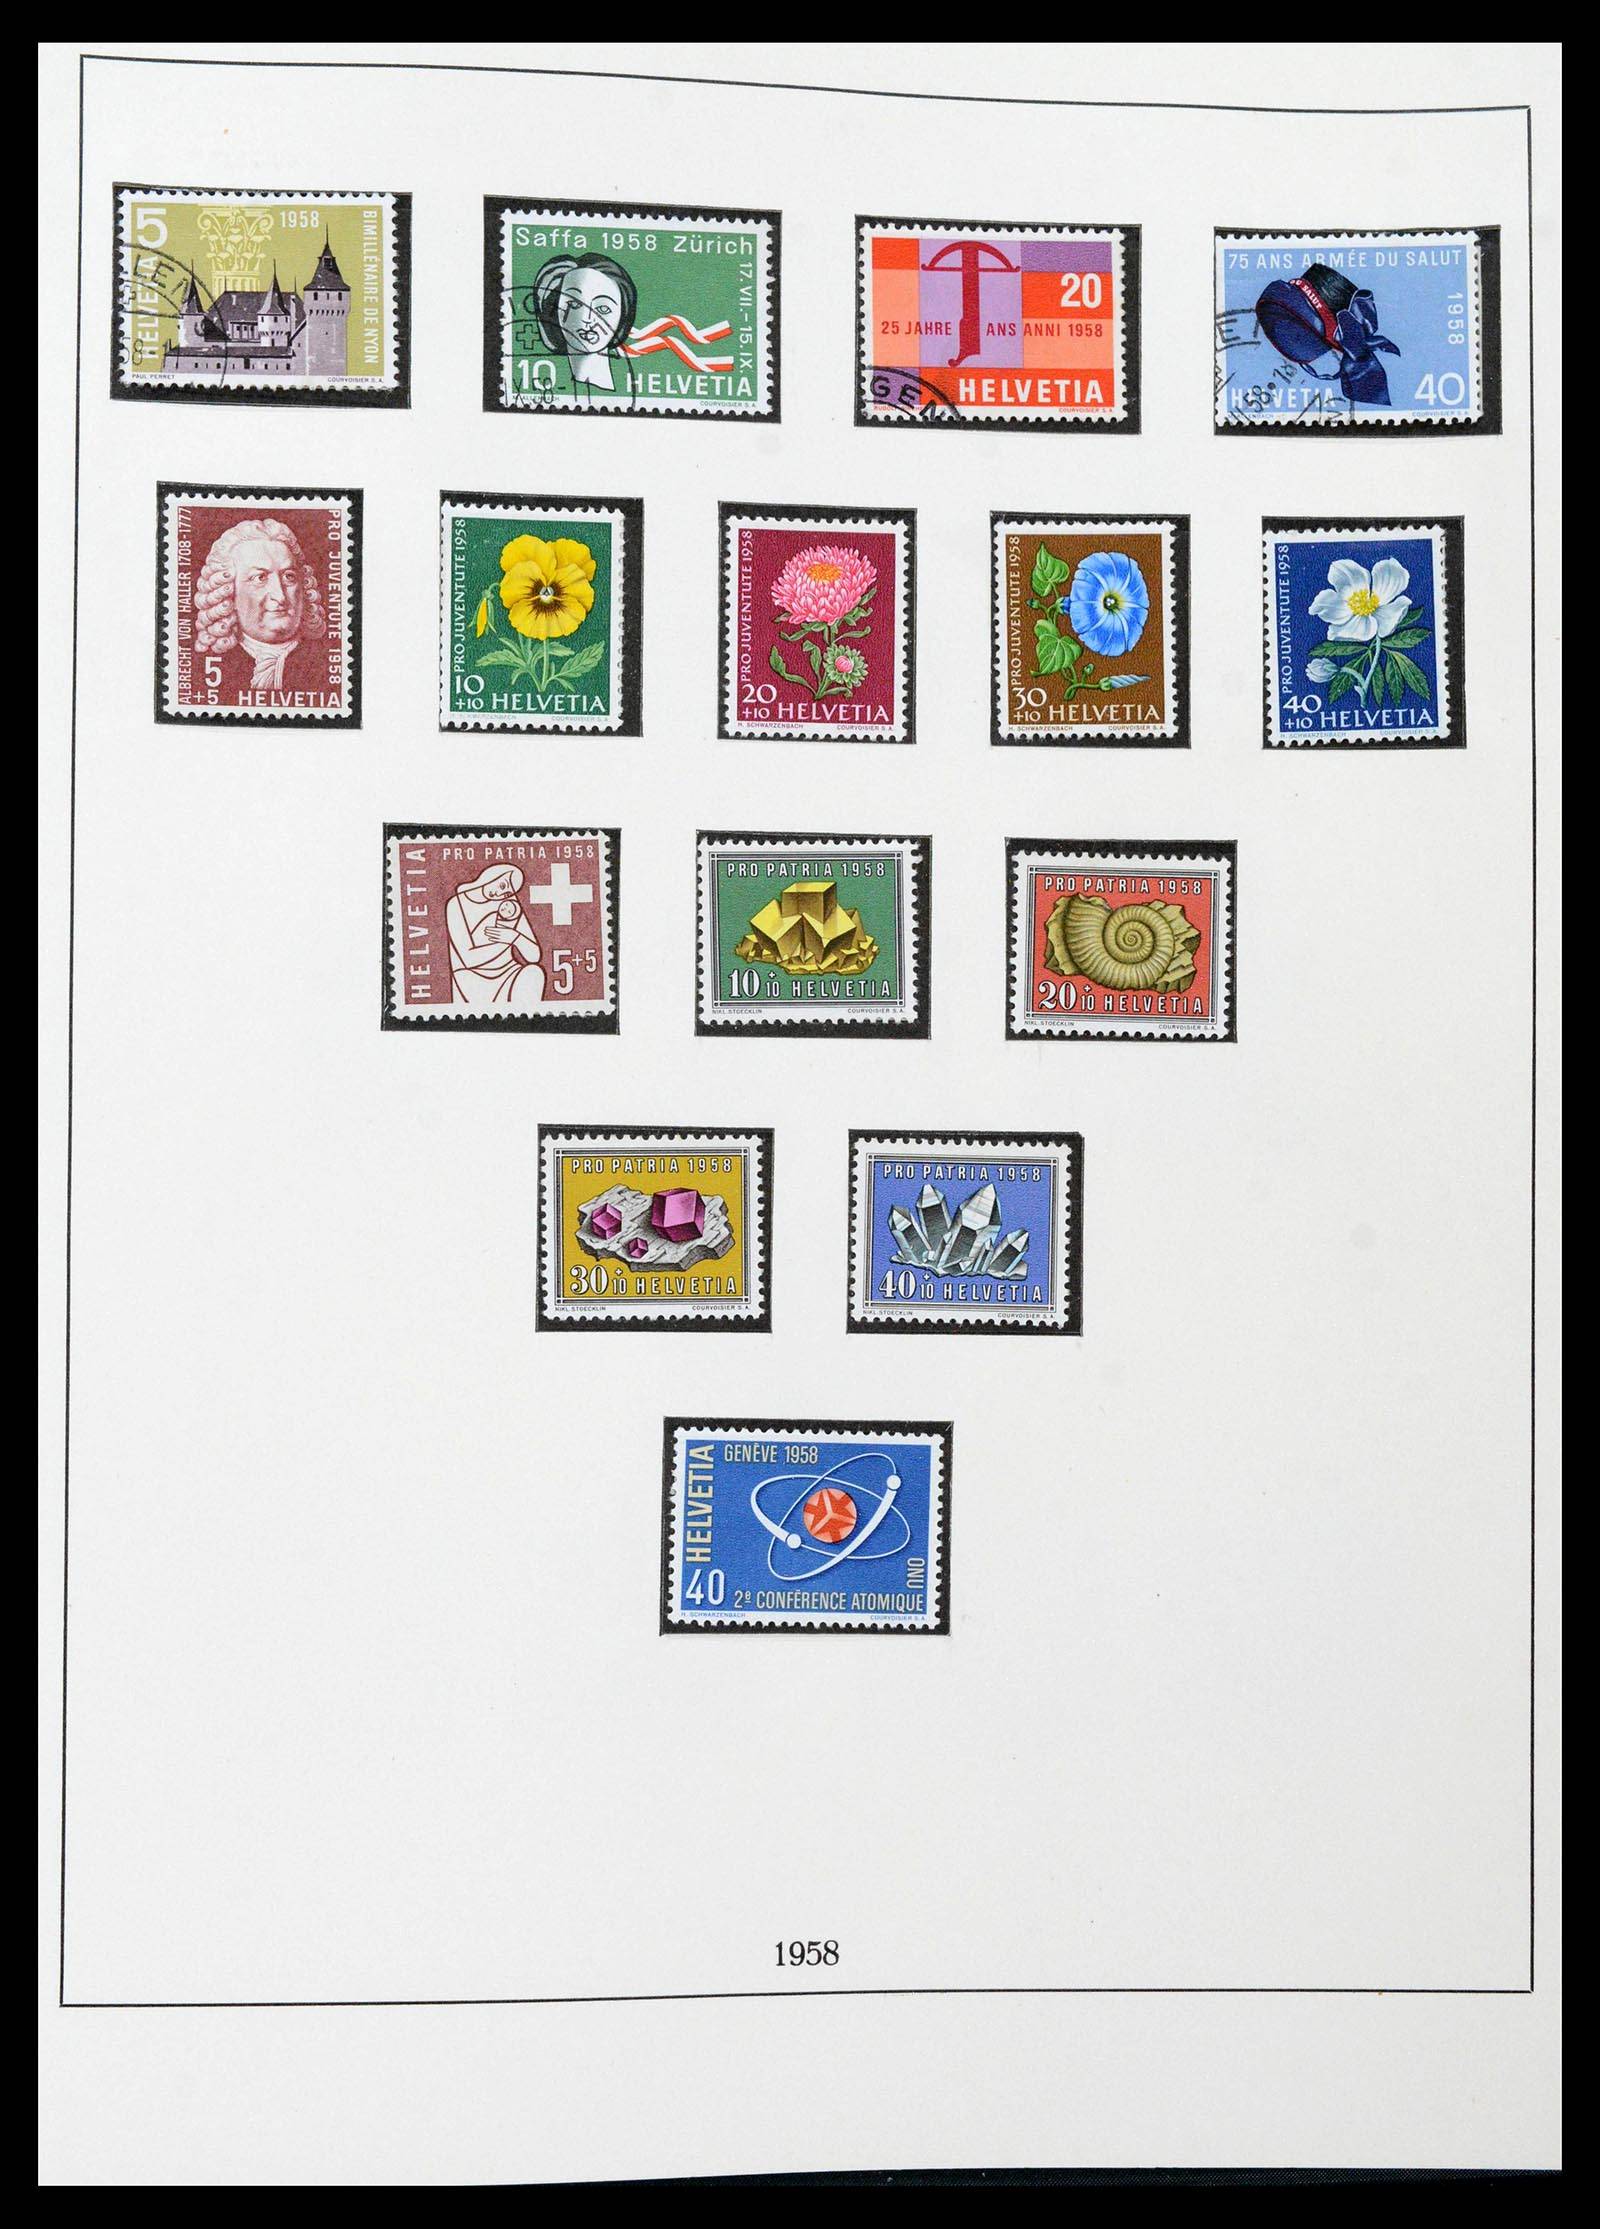 39235 0057 - Stamp collection 39235 Switzerland 1843-1960.